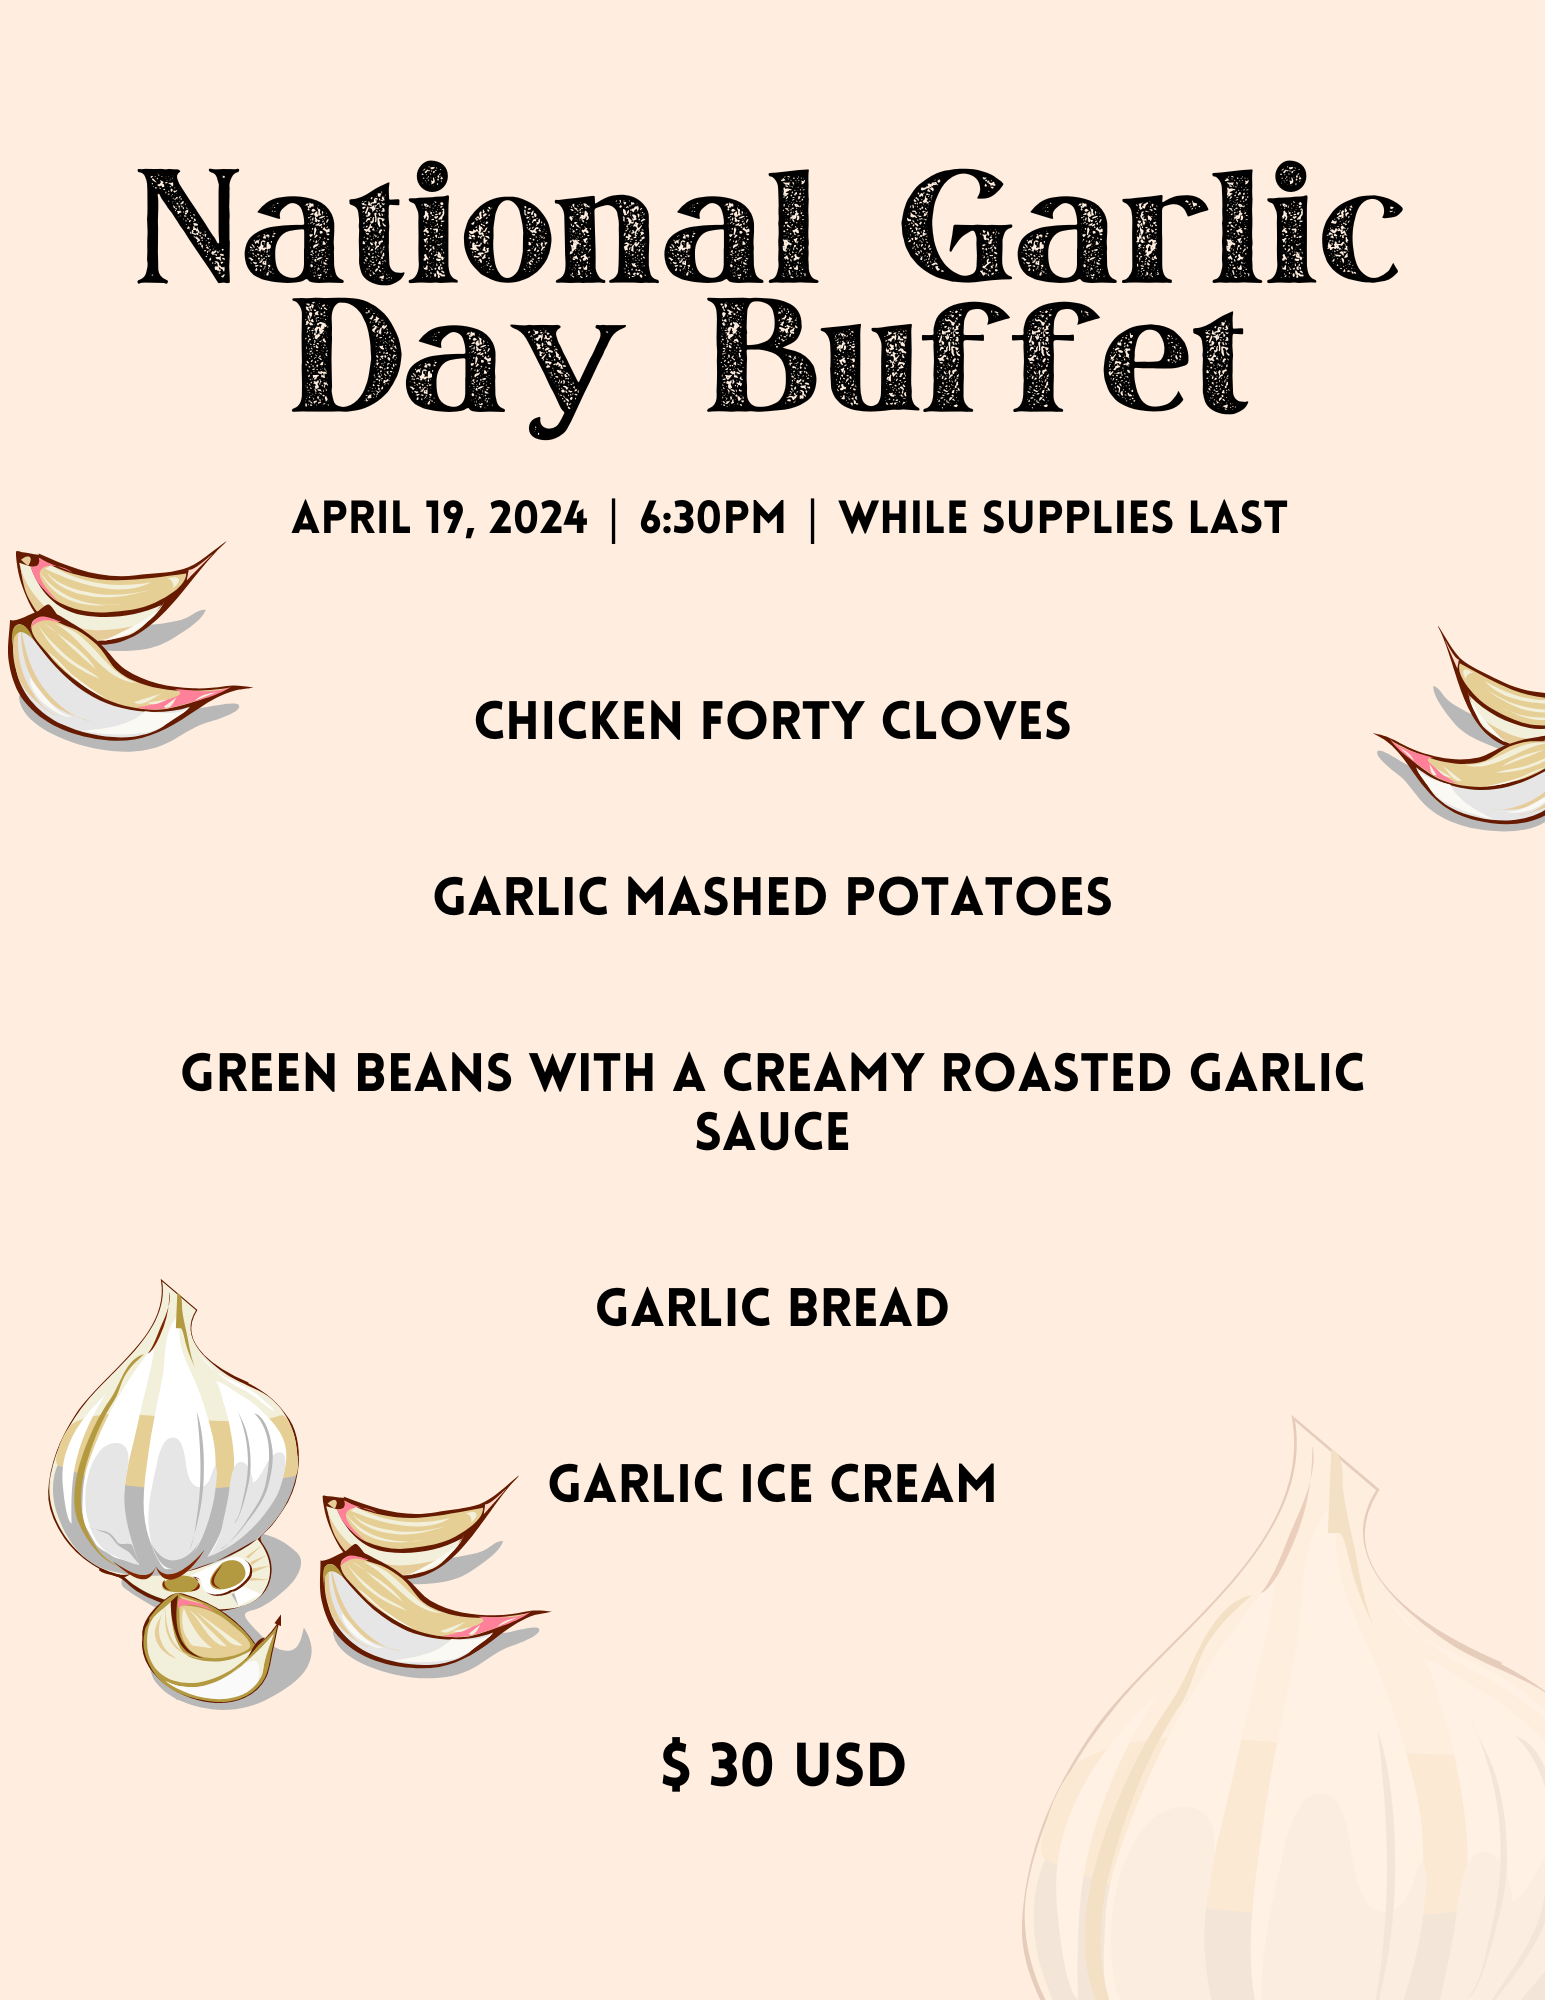 National Garlic Day Buffet! April 19th